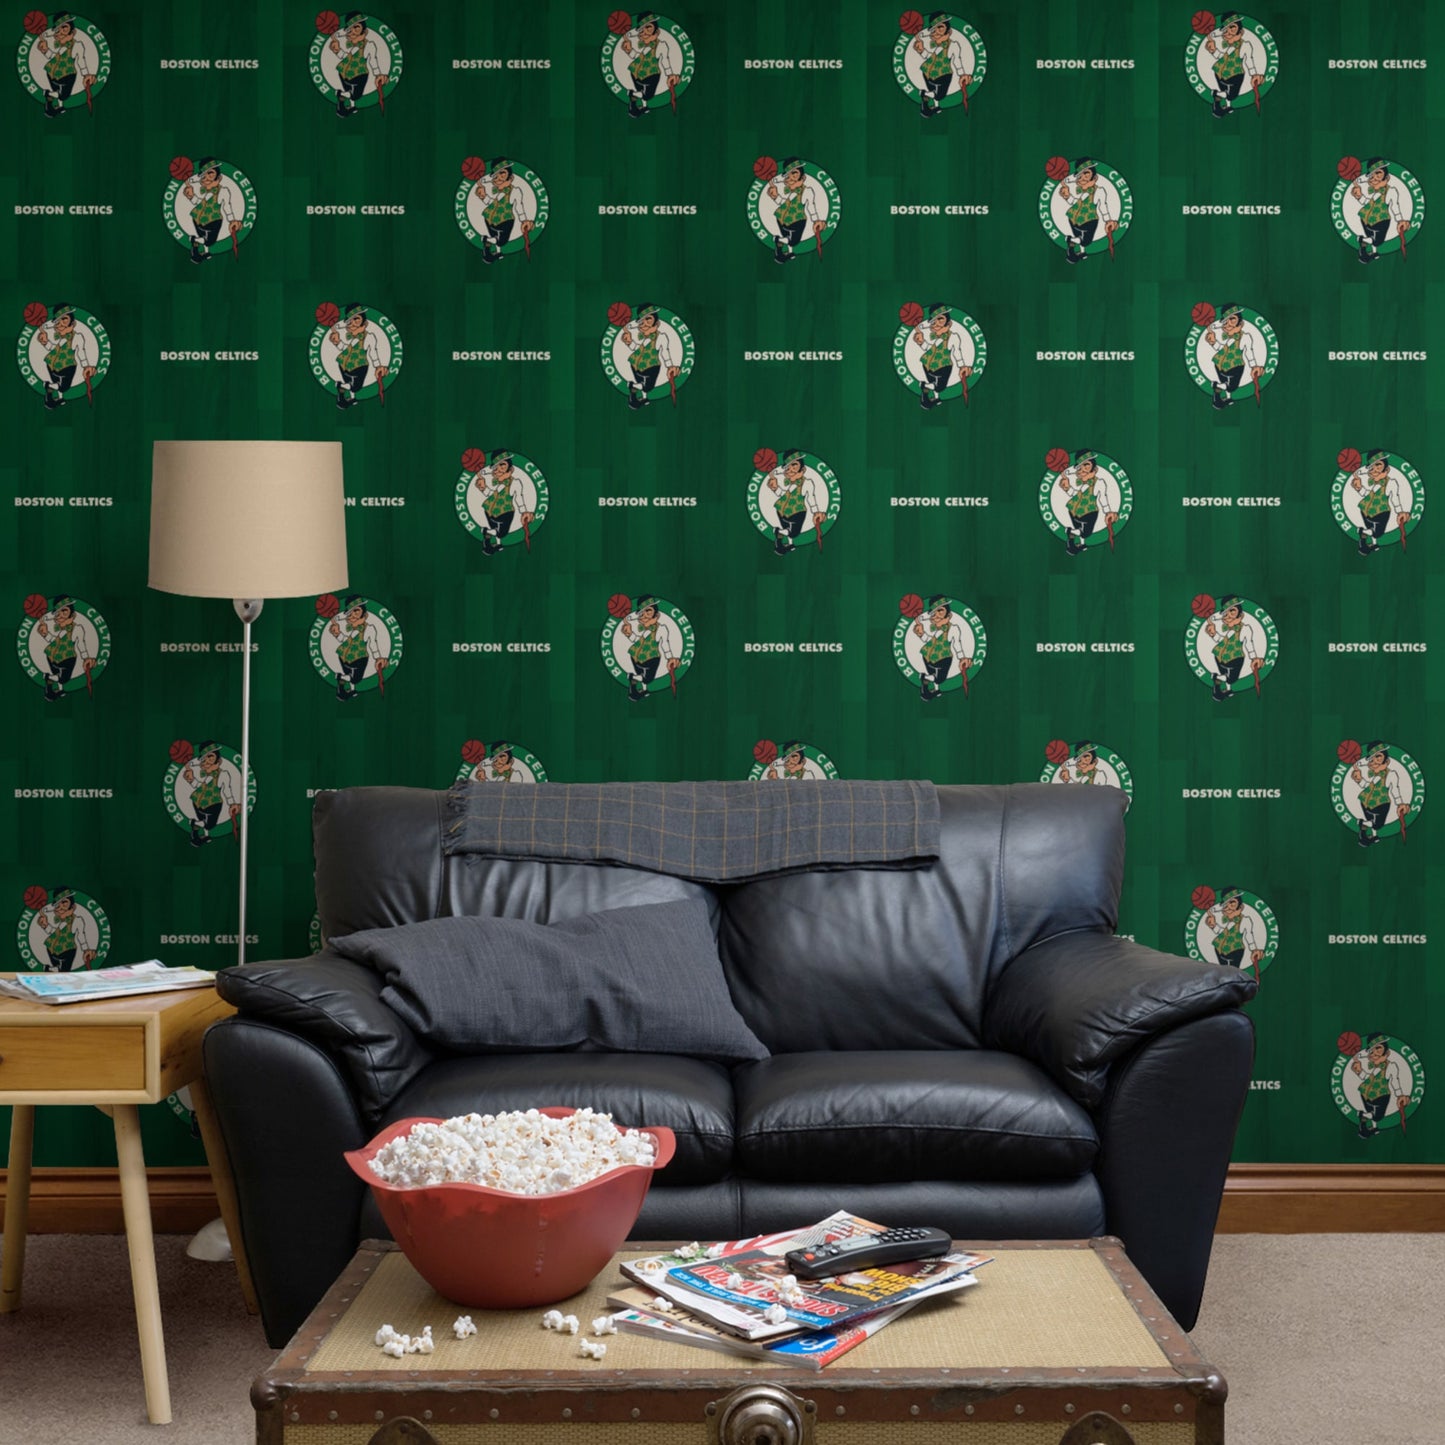 Boston Celtics (Green): Hardwood Pattern - Officially Licensed NBA Peel & Stick Wallpaper